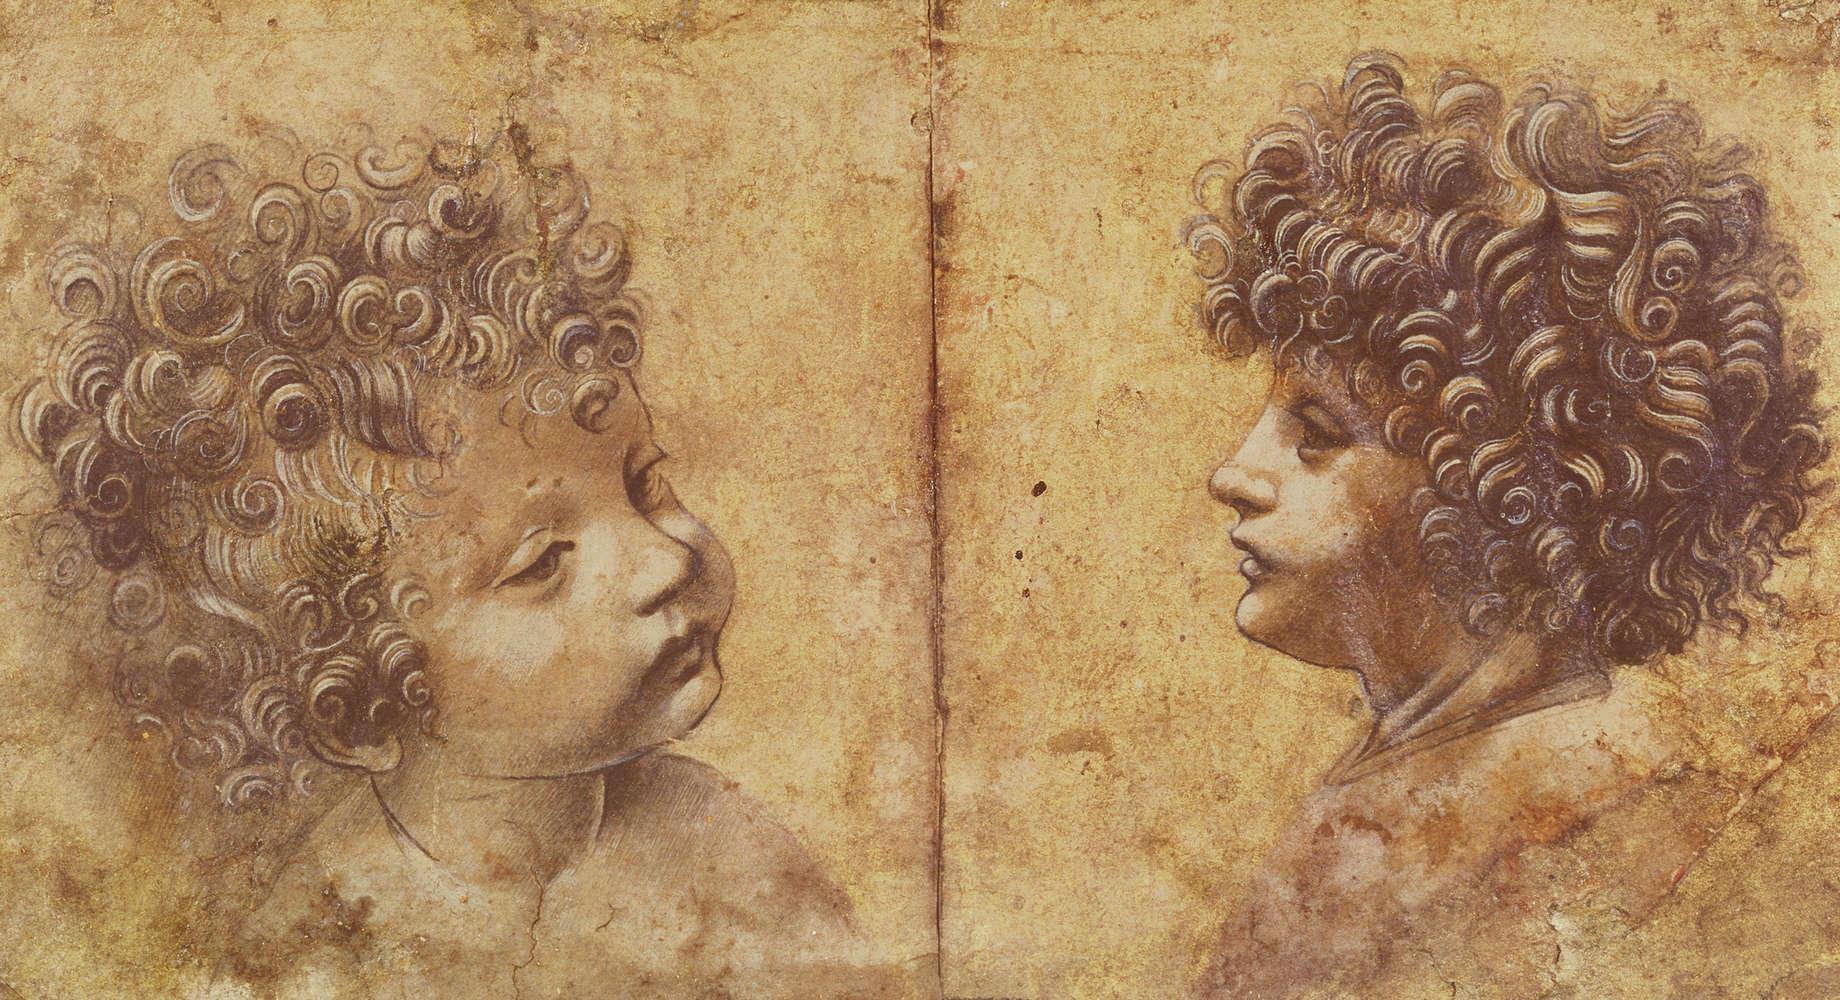             Leonardo da Vinci "Study of a child's head" mural
        